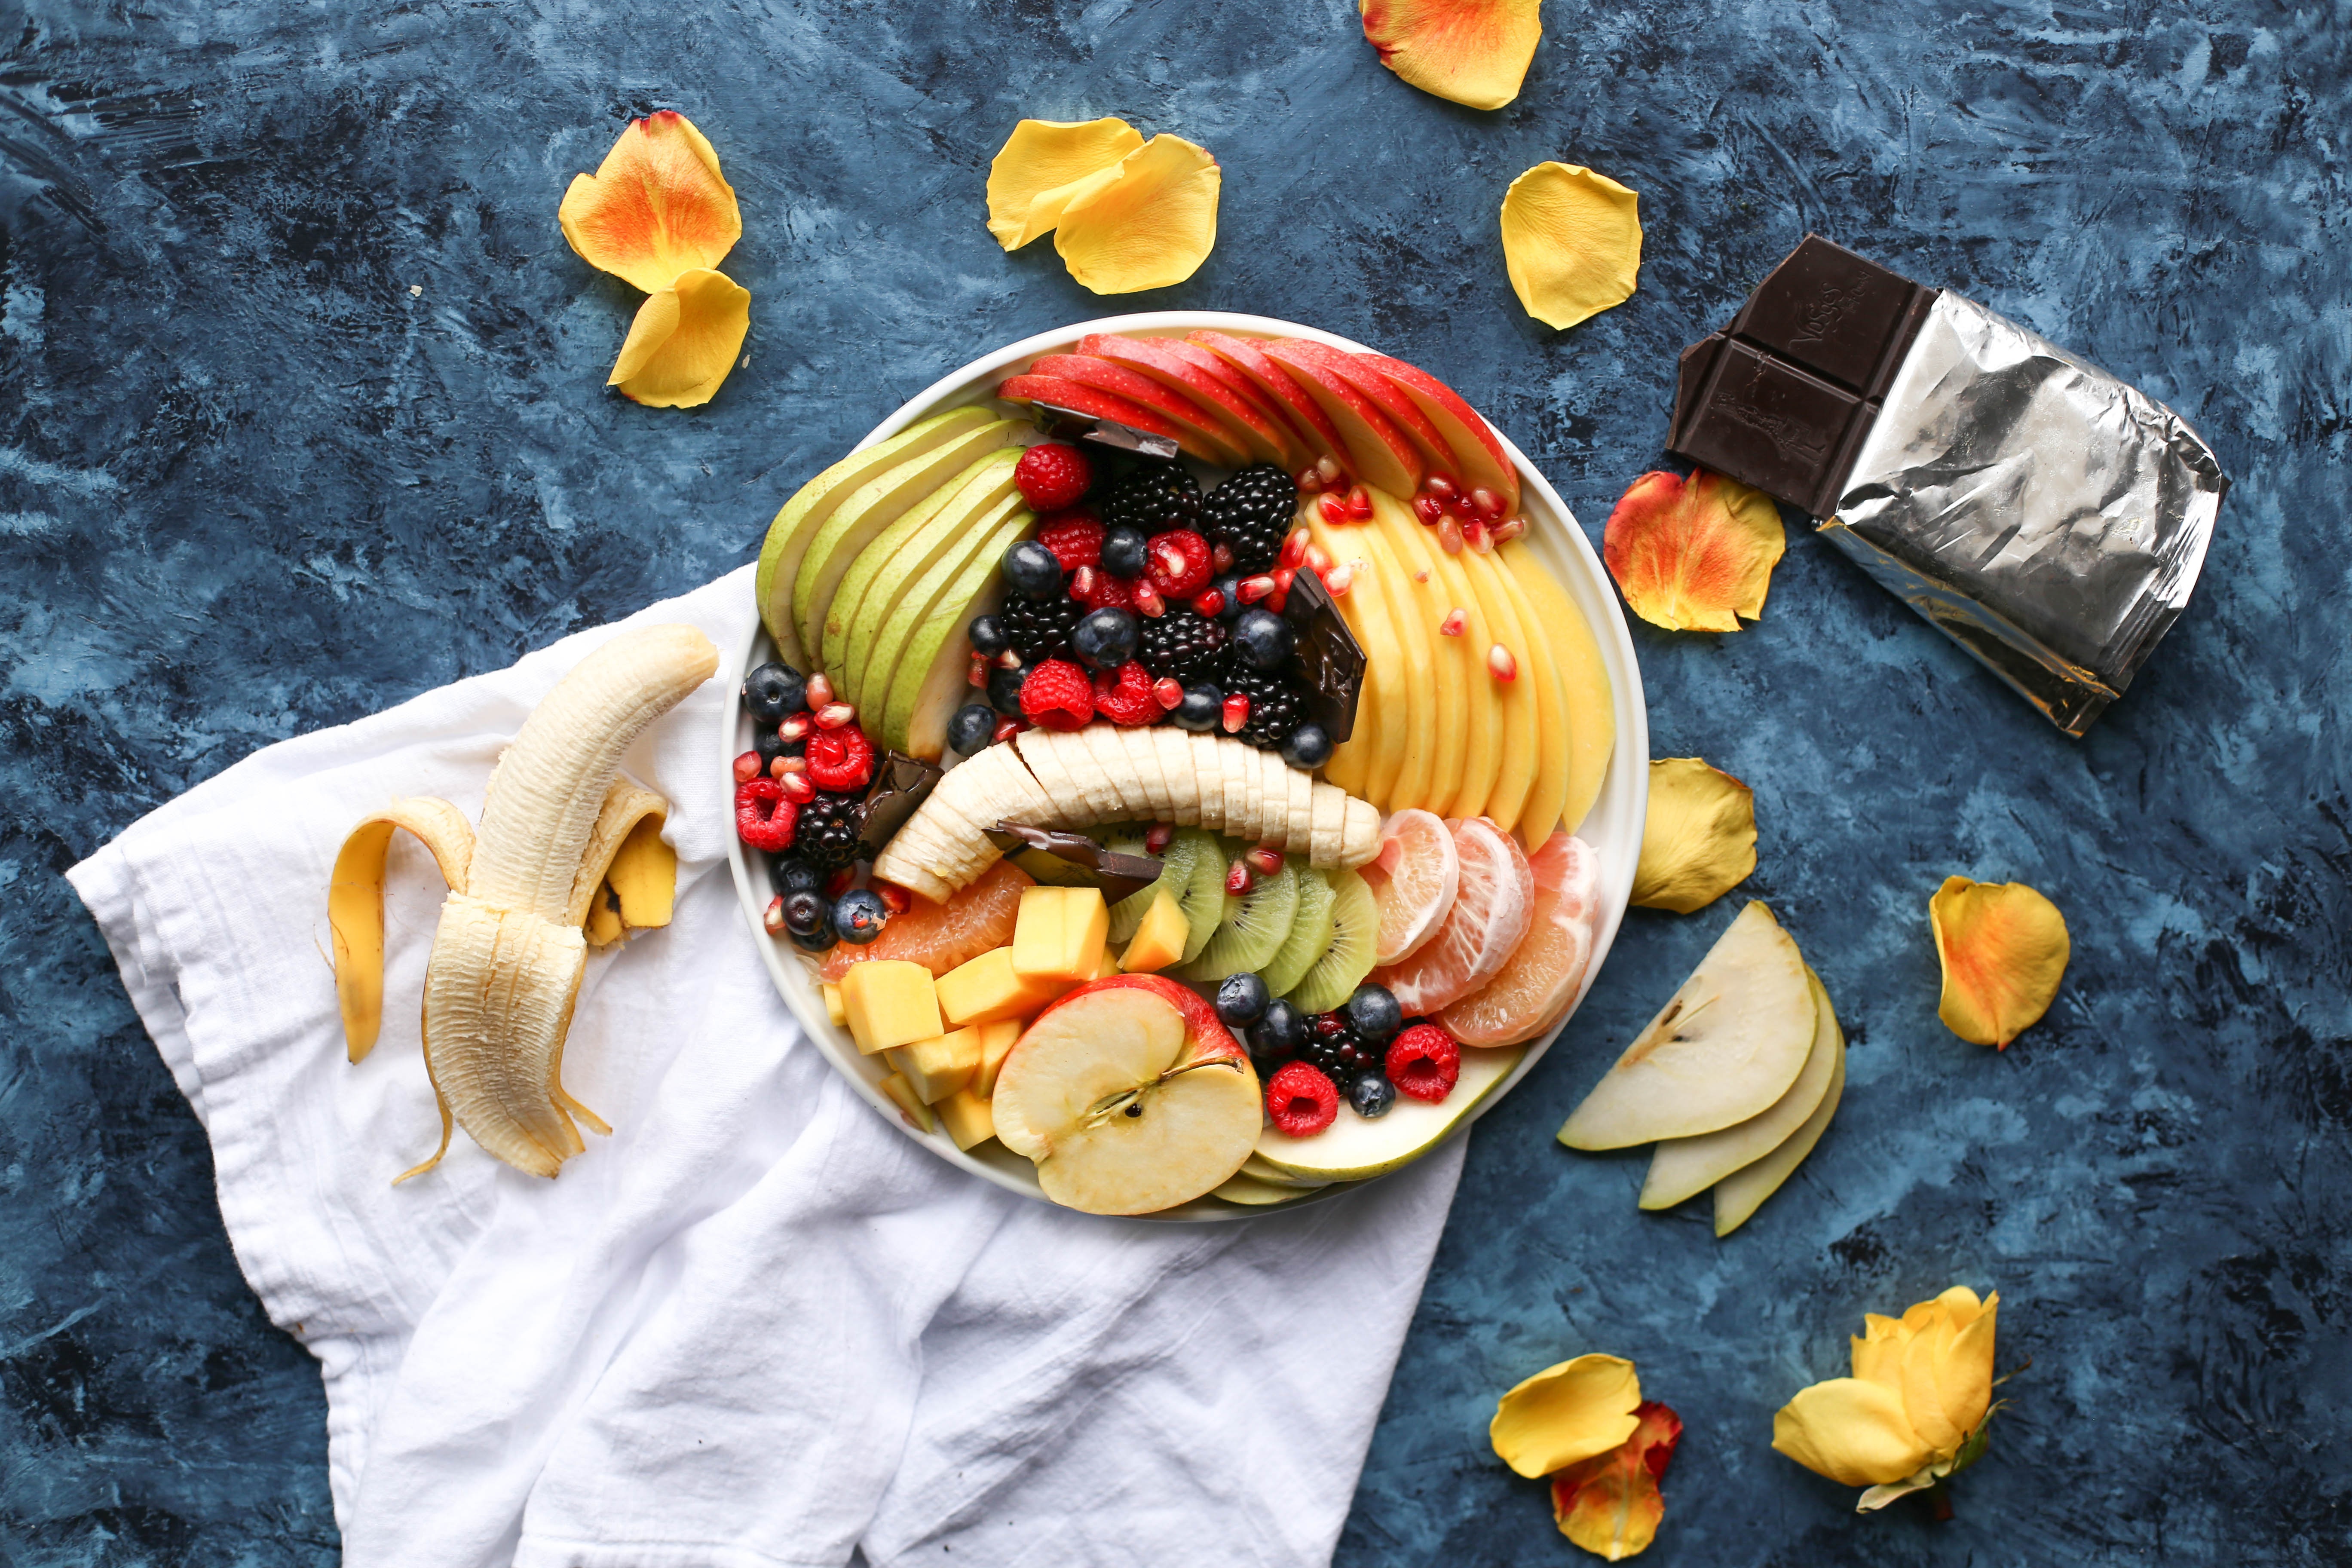 Image: Food, fruit, pieces, chocolate, cloth, table, banana, berries, petals